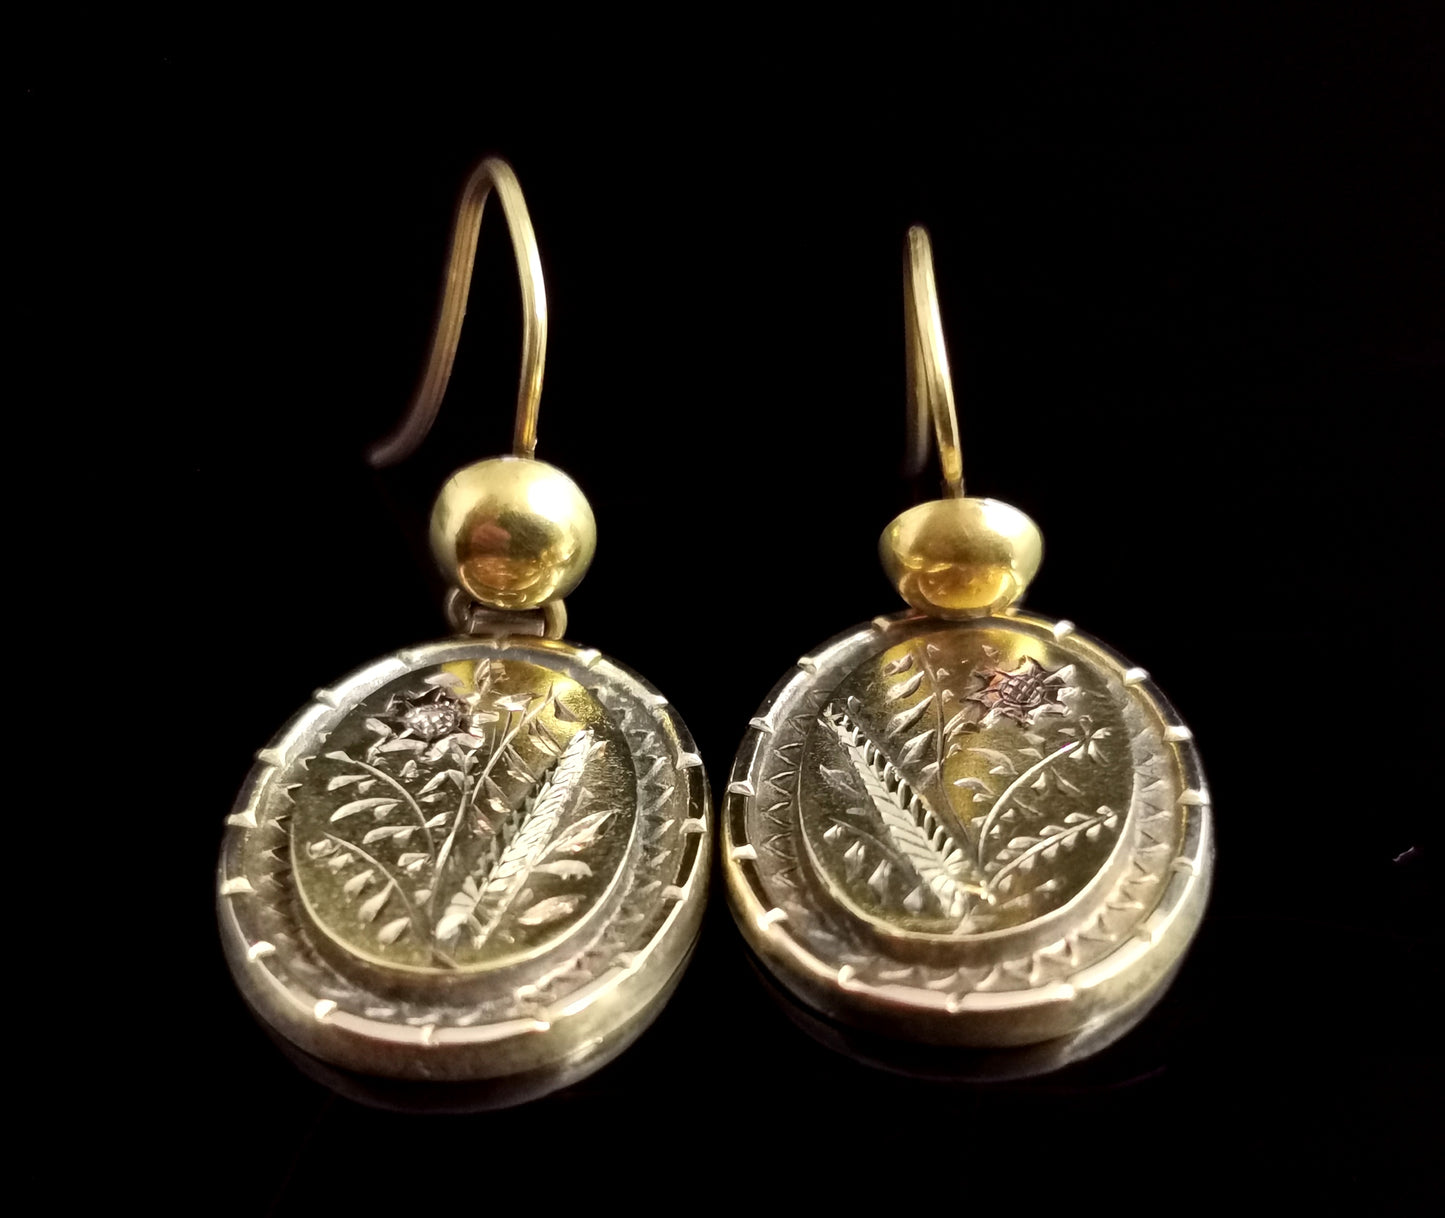 Antique Victorian 10ct gold door knocker earrings, drop earrings, Aesthetic